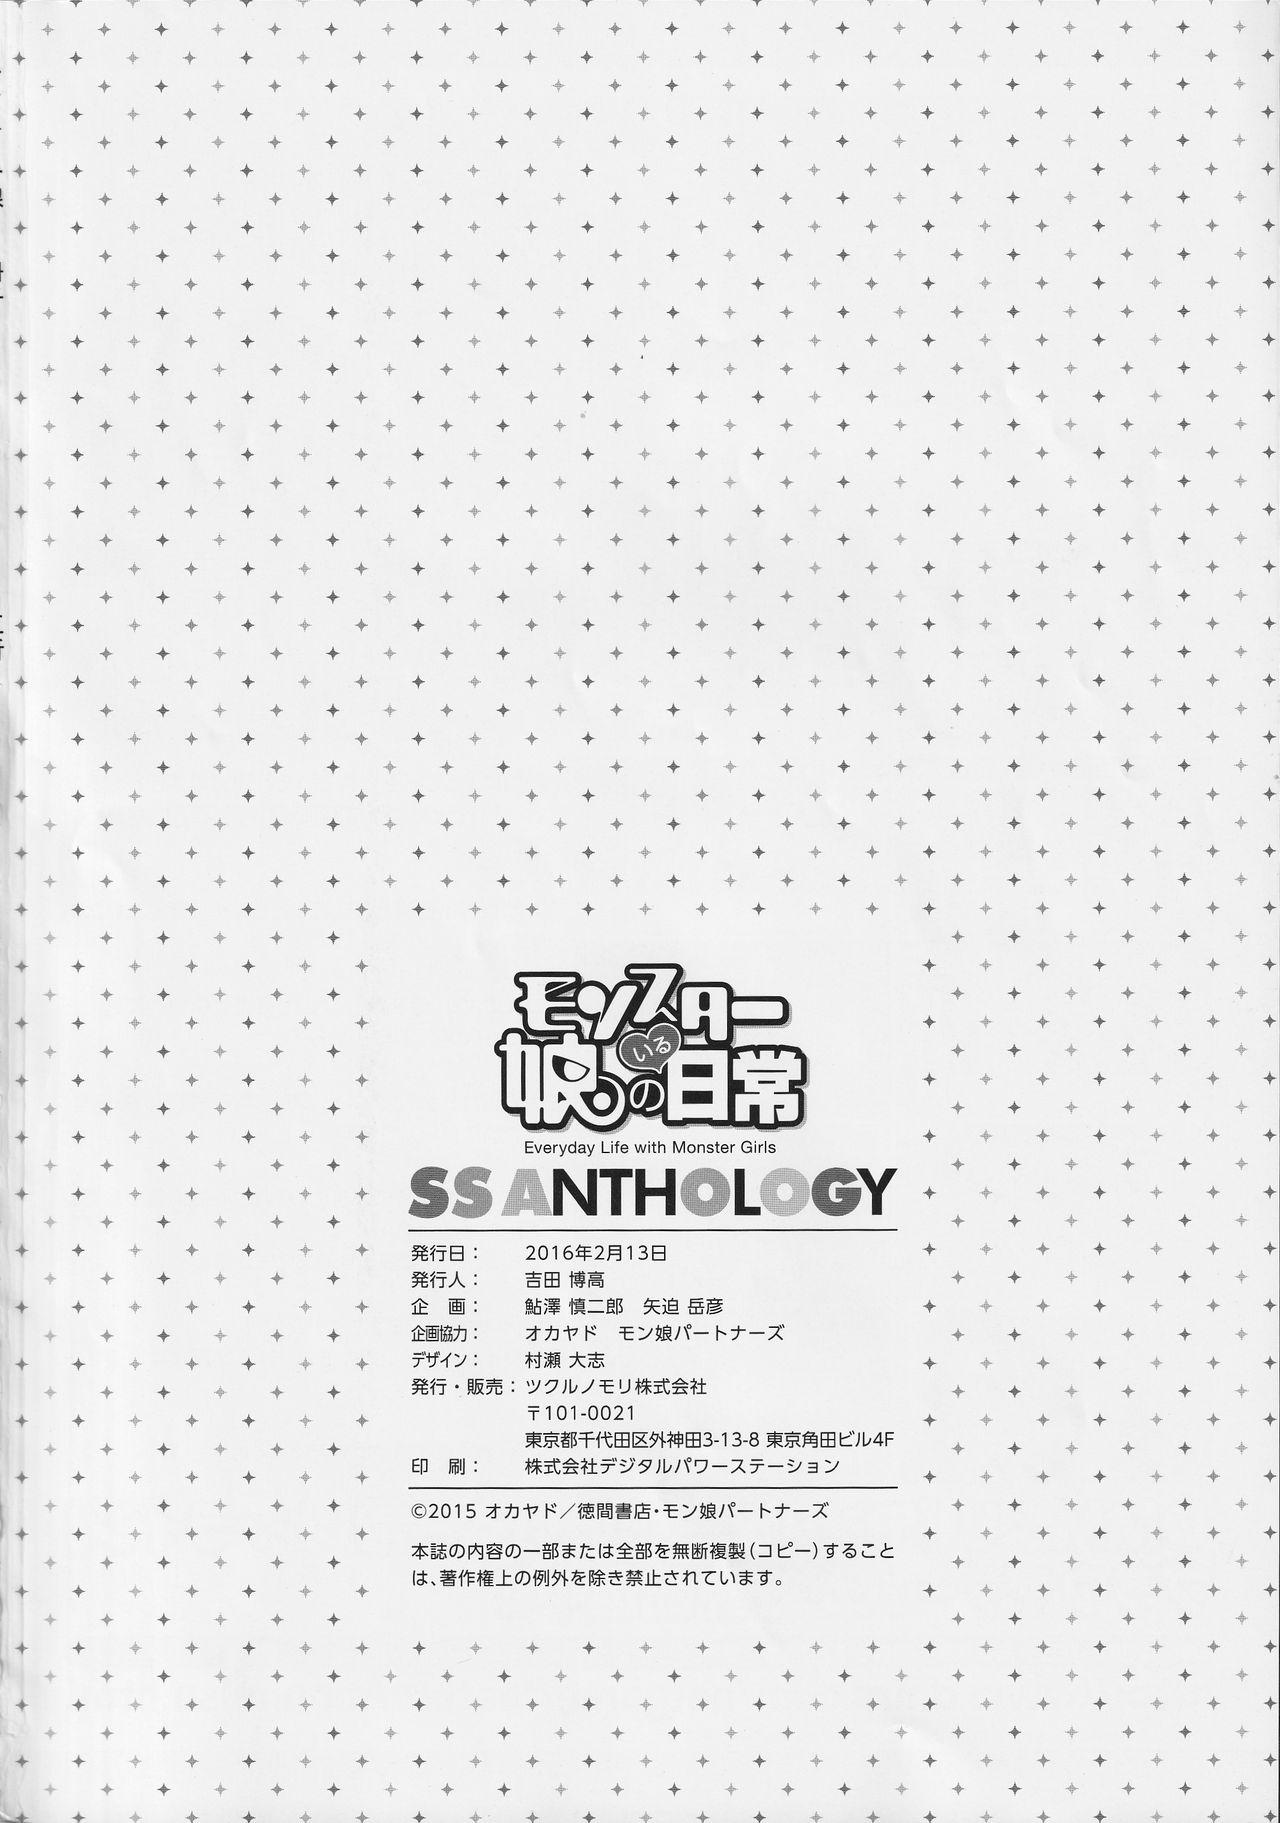 Monster Musume no Iru Nichijou SS ANTHOLOGY - Everyday Life with Monster Girls 79